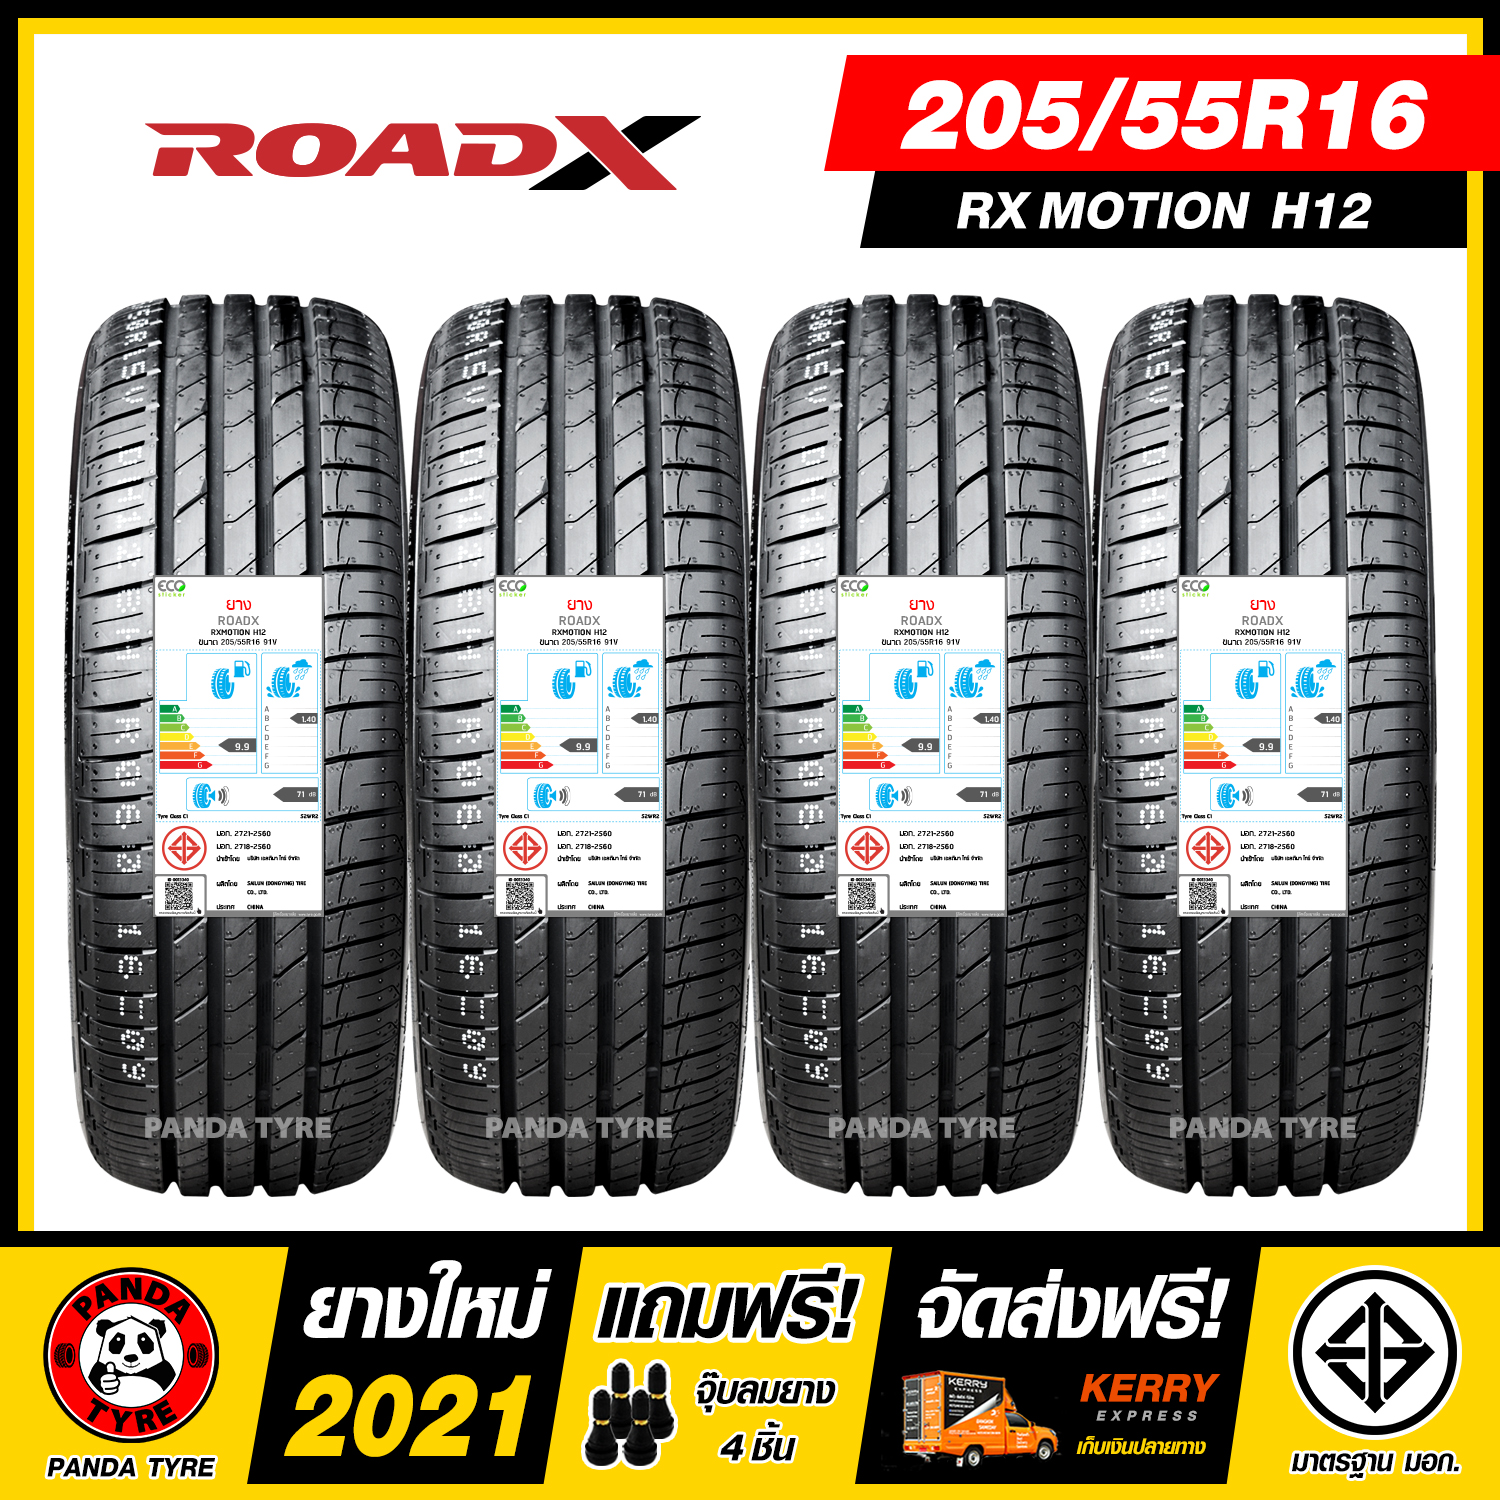 ROADX 205/55R16 ยางรถยนต์ขอบ16 รุ่น RX MOTION H12 - 4 เส้น (ยางใหม่ผลิตปี 2021)